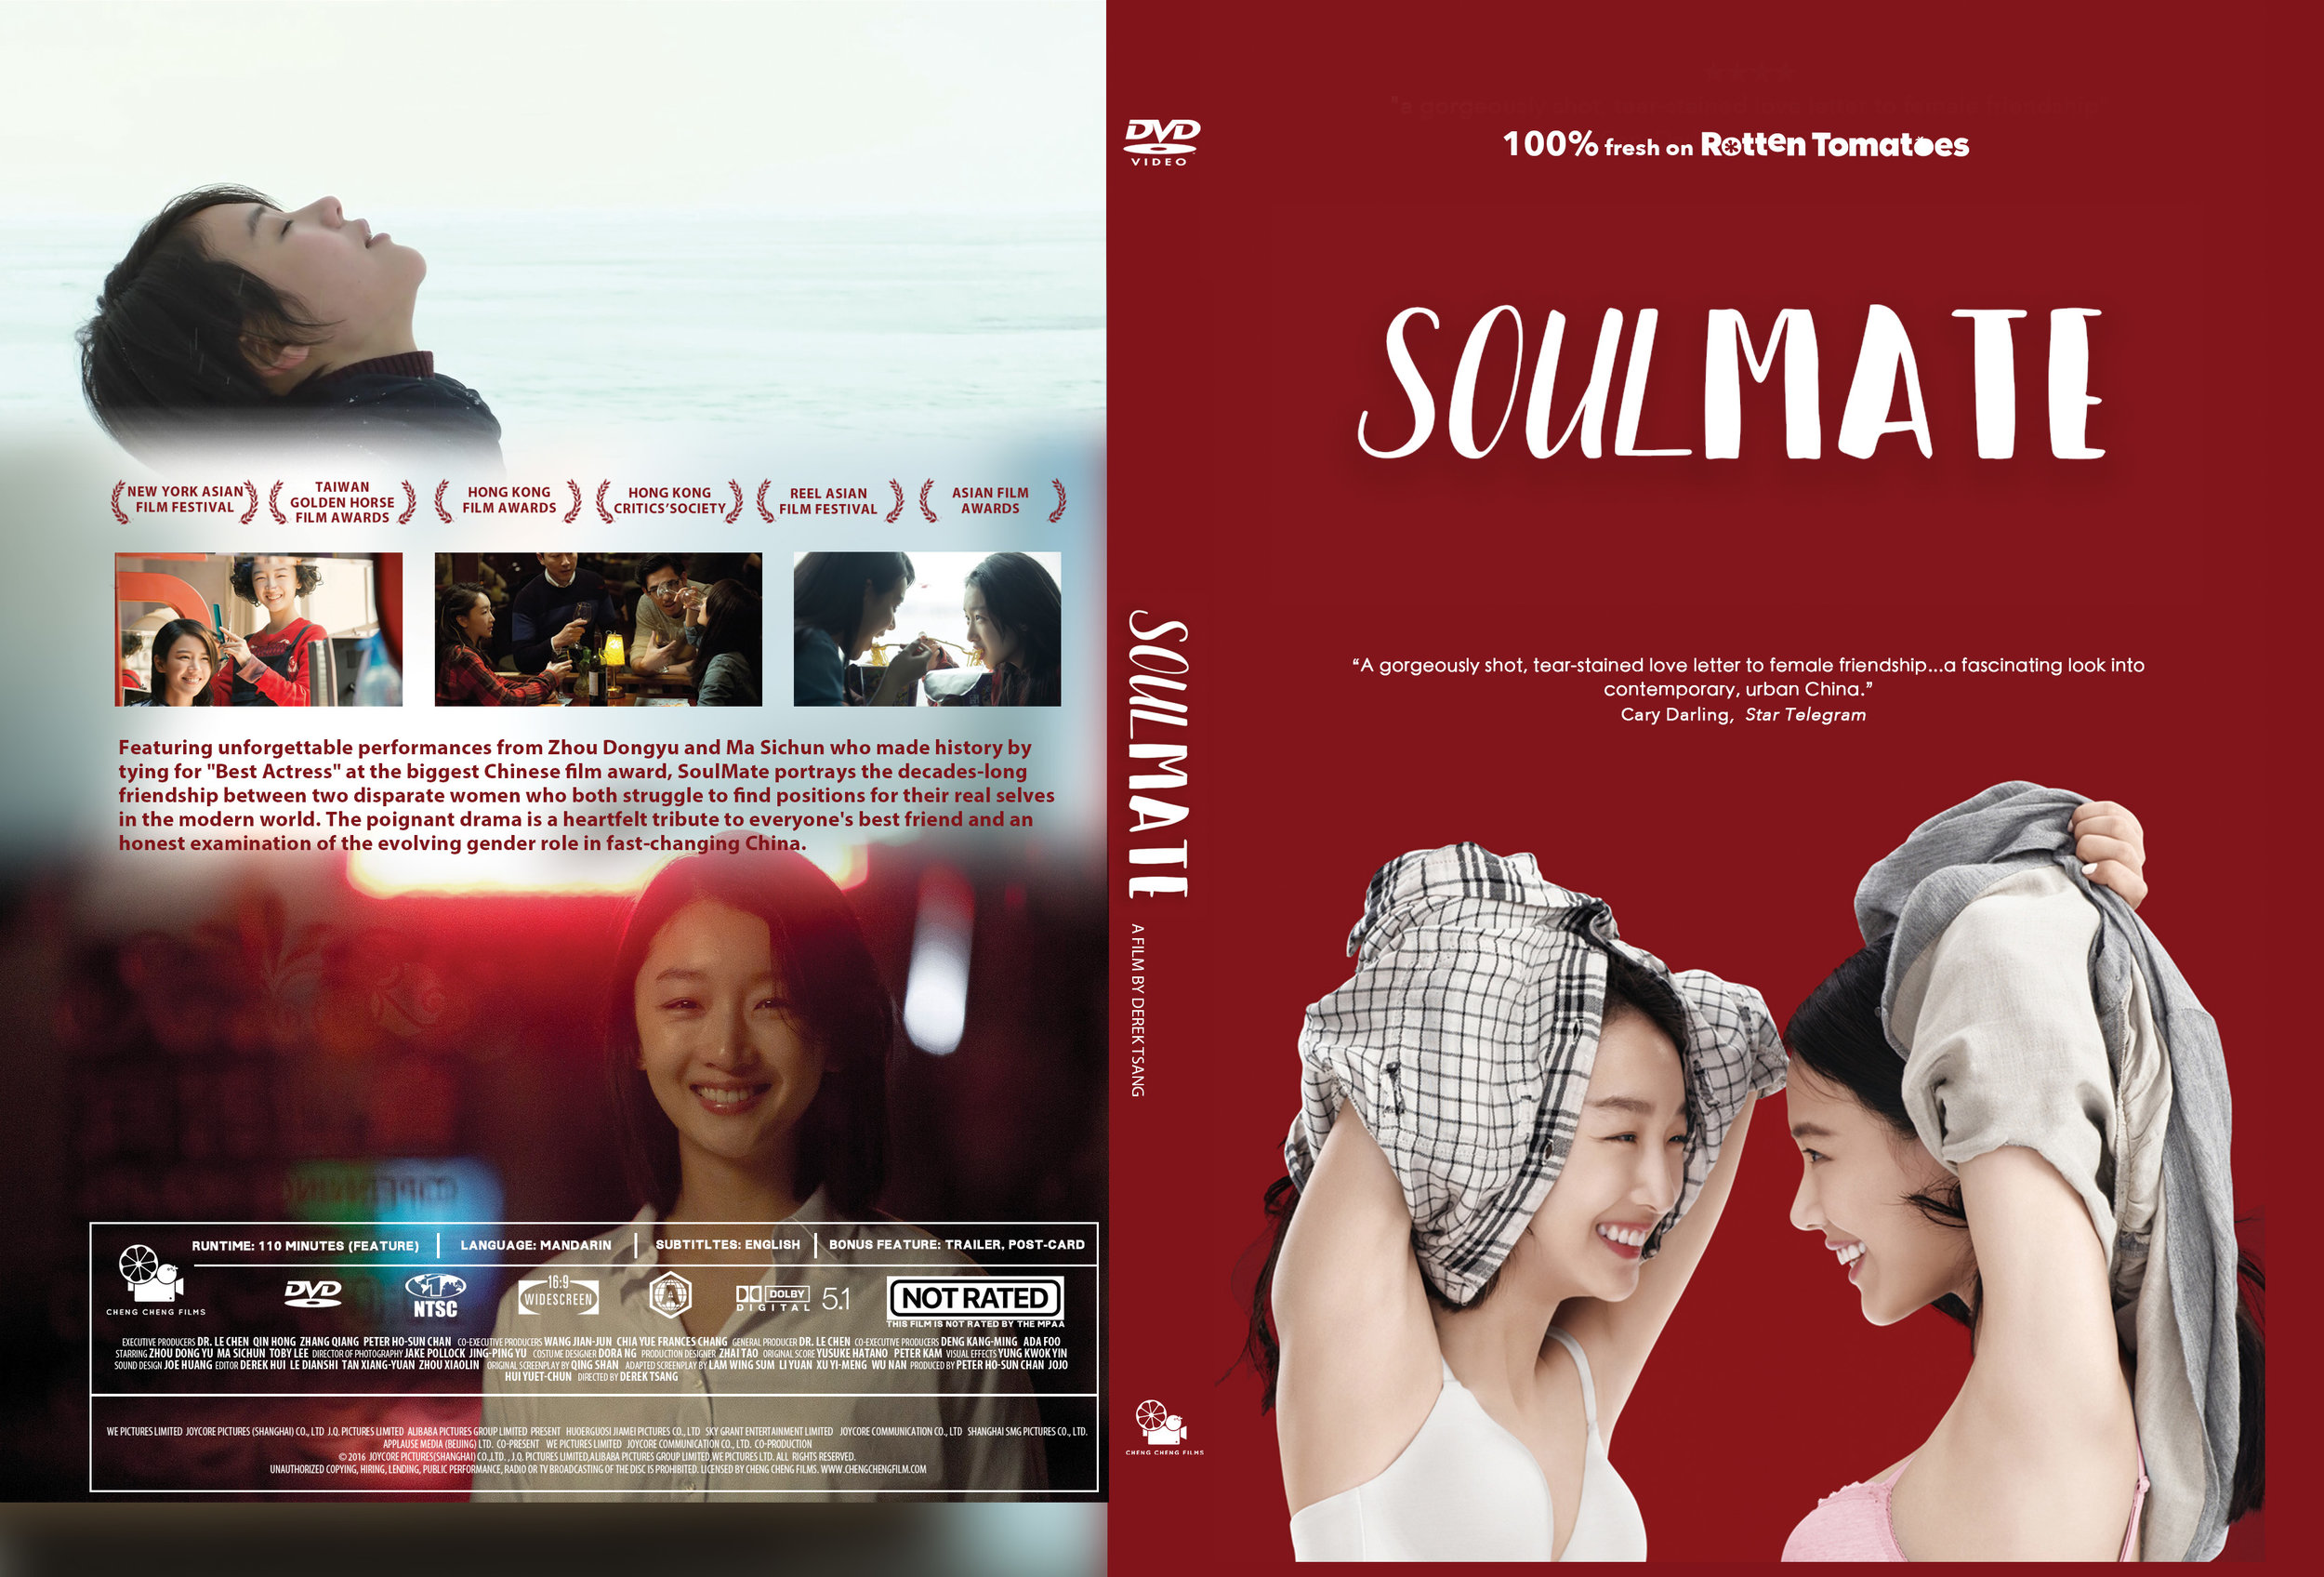 Soul Mate 七月与安生 — CHENG CHENG FILMS